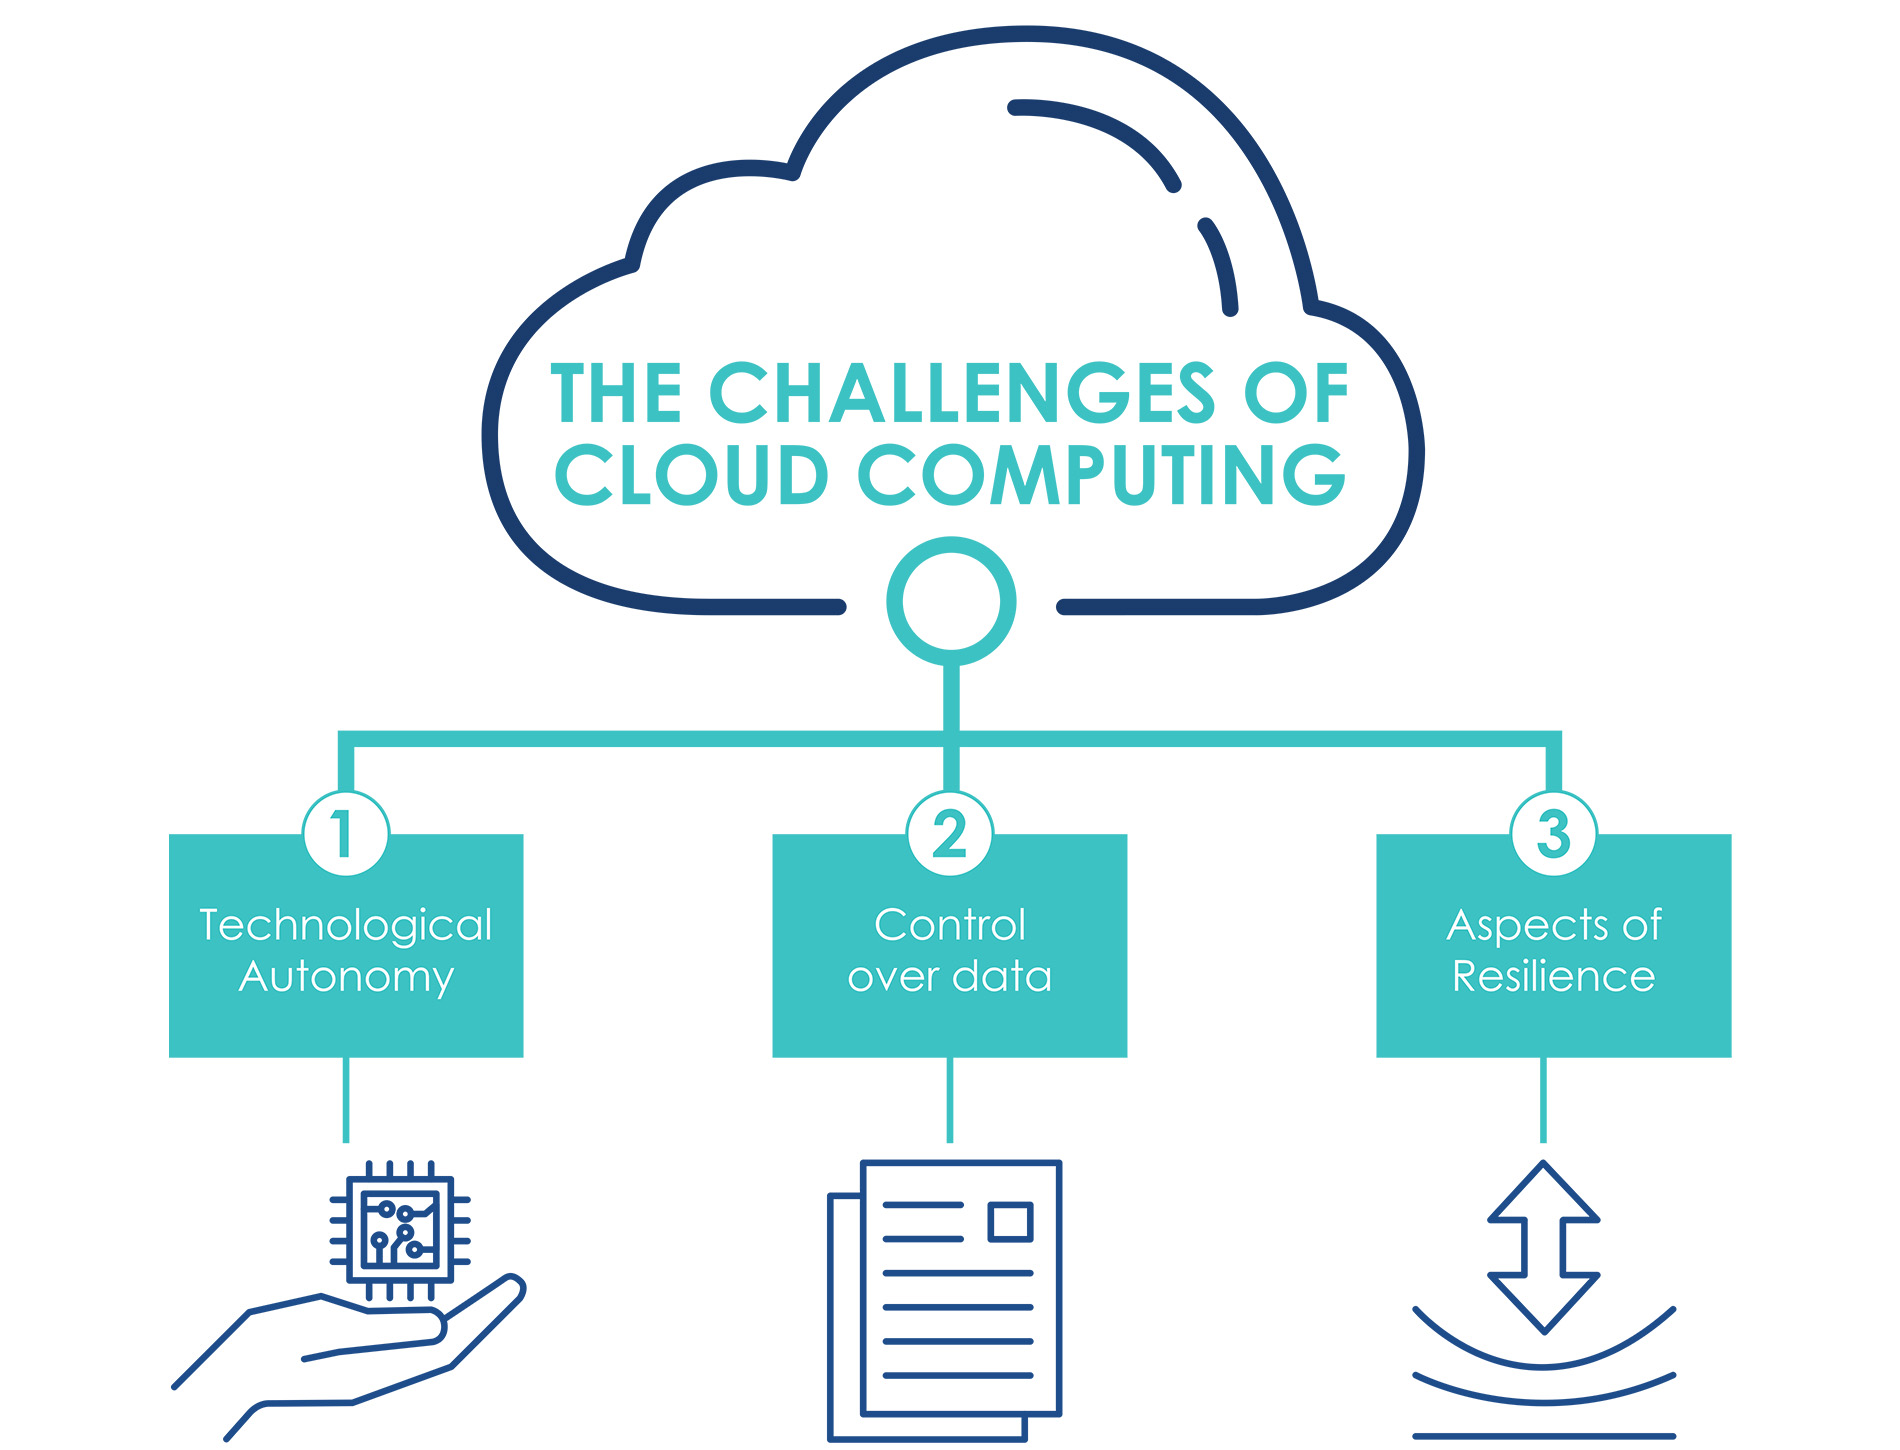 Figure showing Cloud Computing challenges.